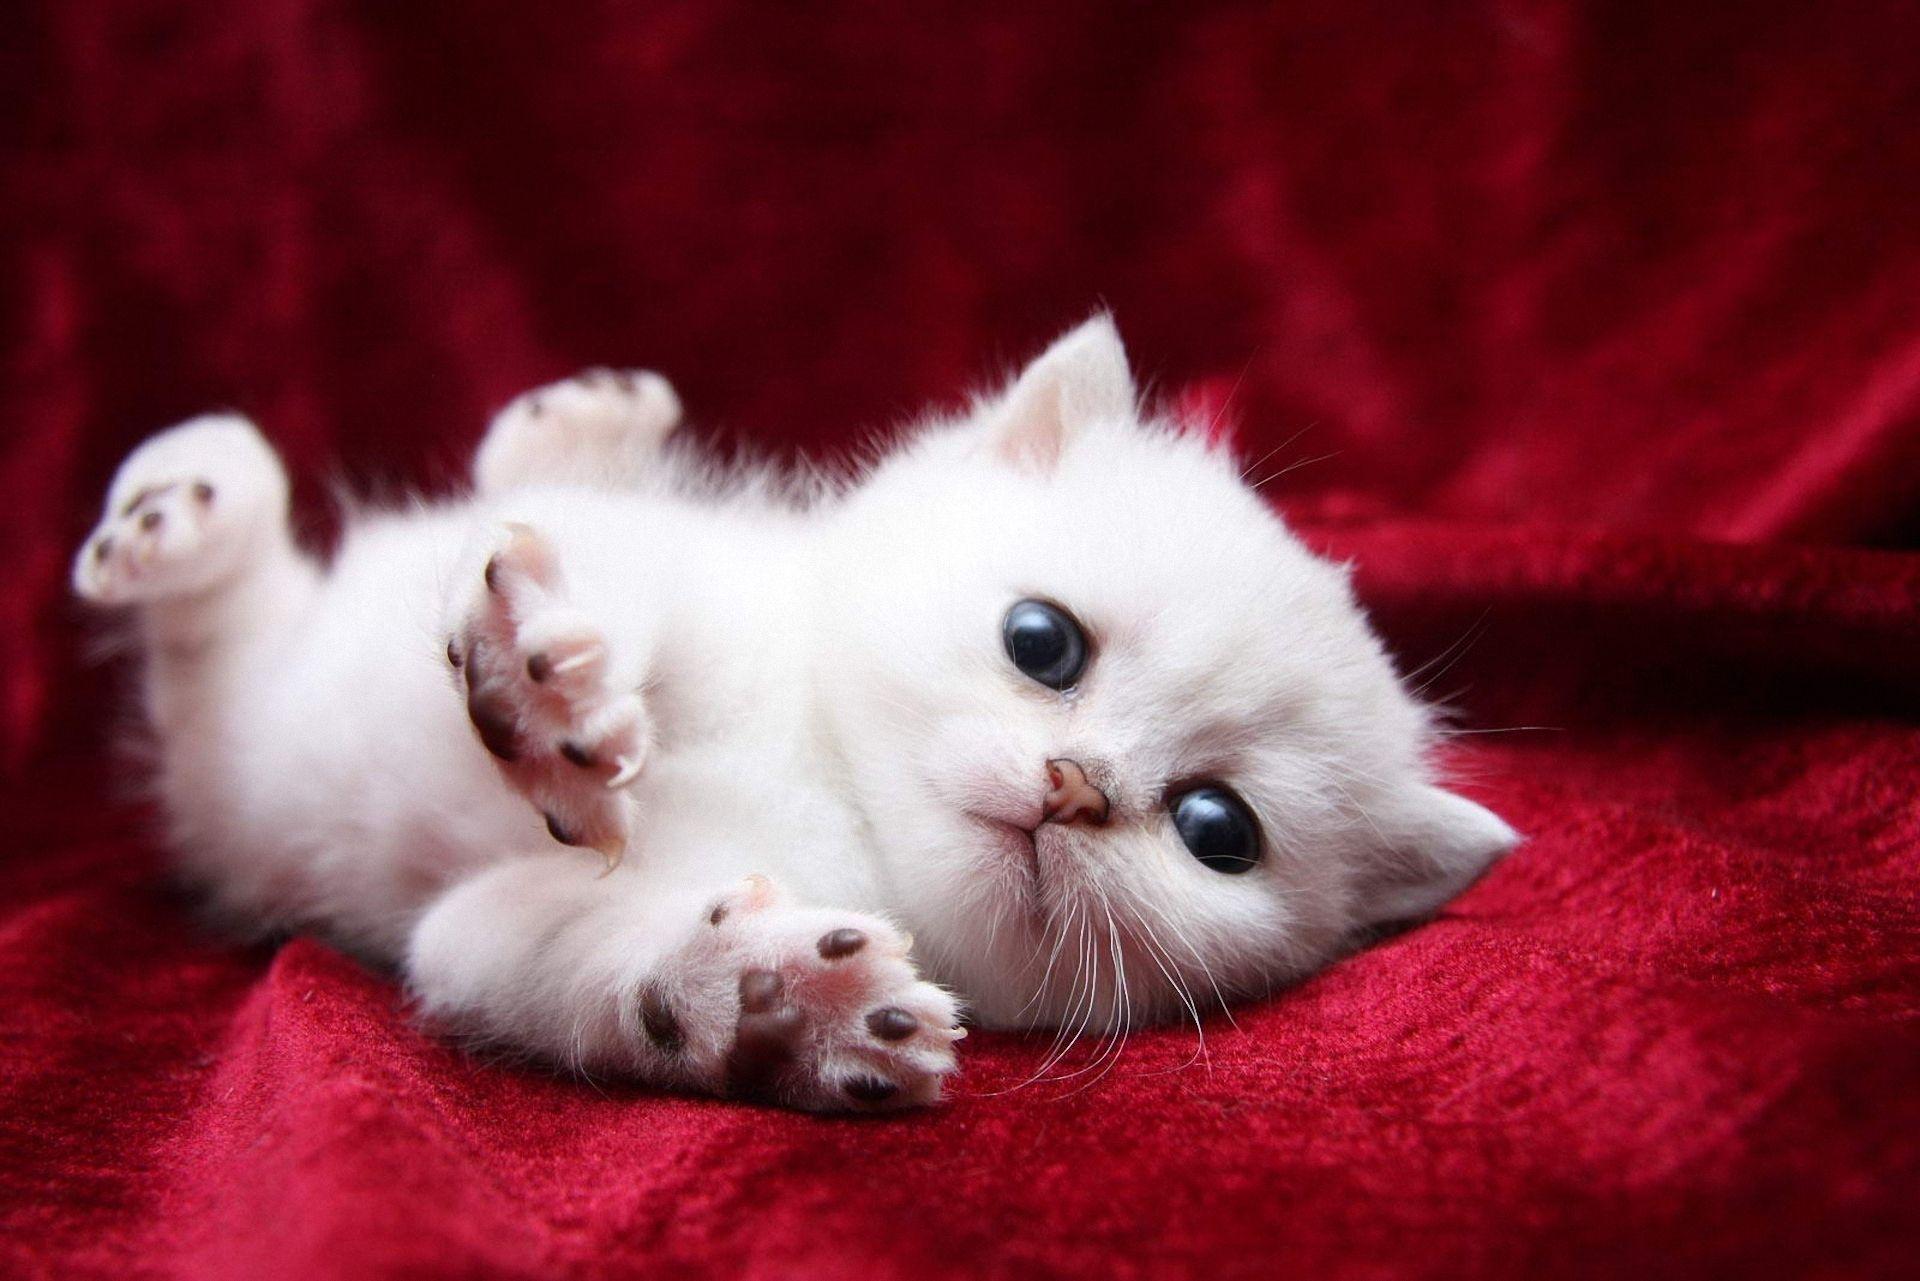 Stretches, White, Feet, Eyes, Cover, Blanket, Kitty, Cat